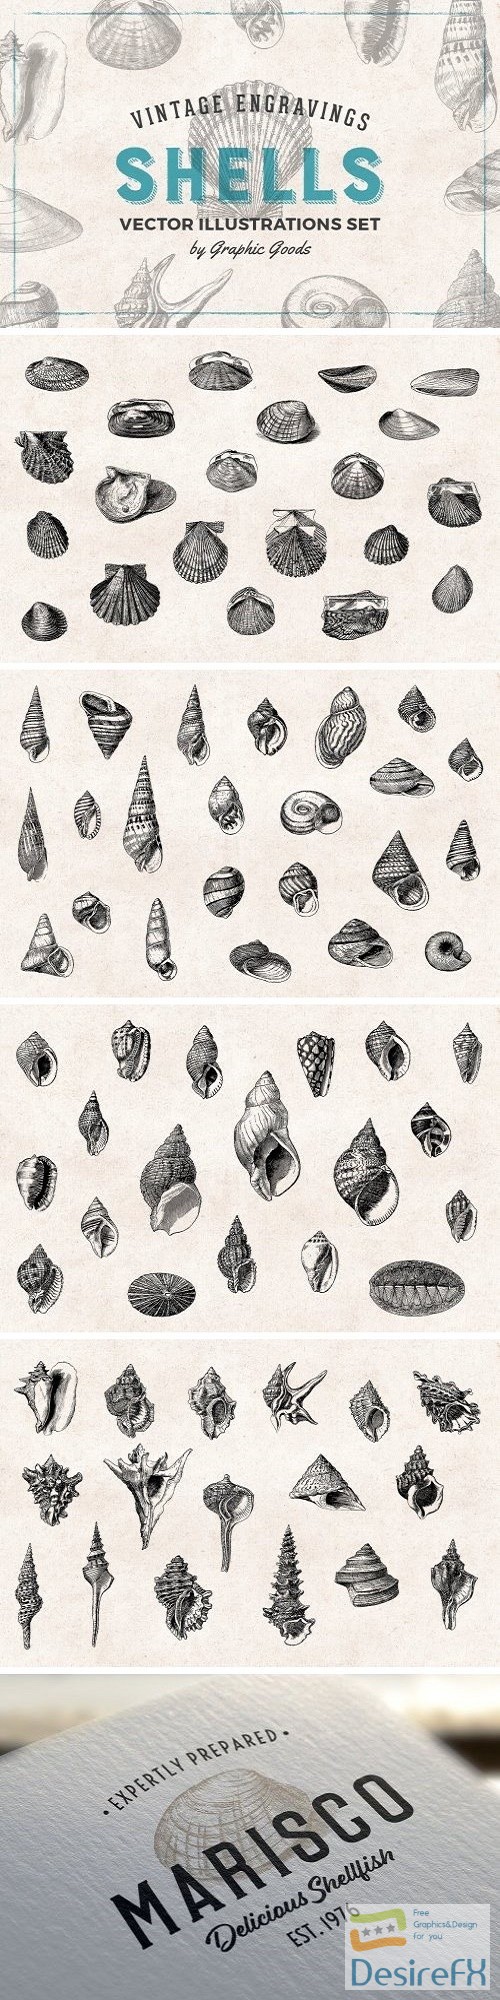 Shells - Vintage Engravings Set - 1400736